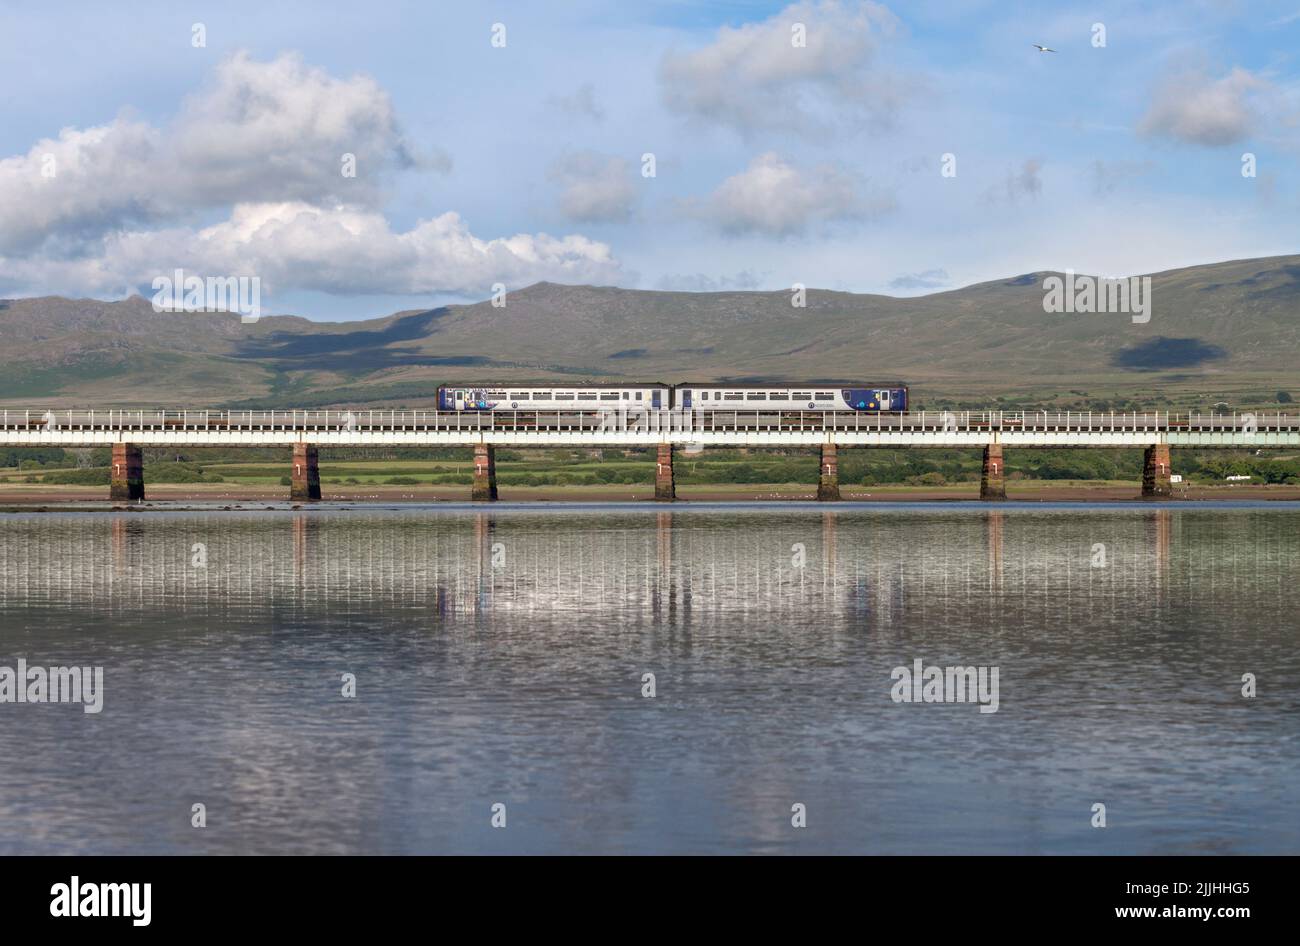 Northern Rail class 156 sprinter train crossing Eskmeals viaduct on the scenic rural Cumbrian coast railway line Stock Photo